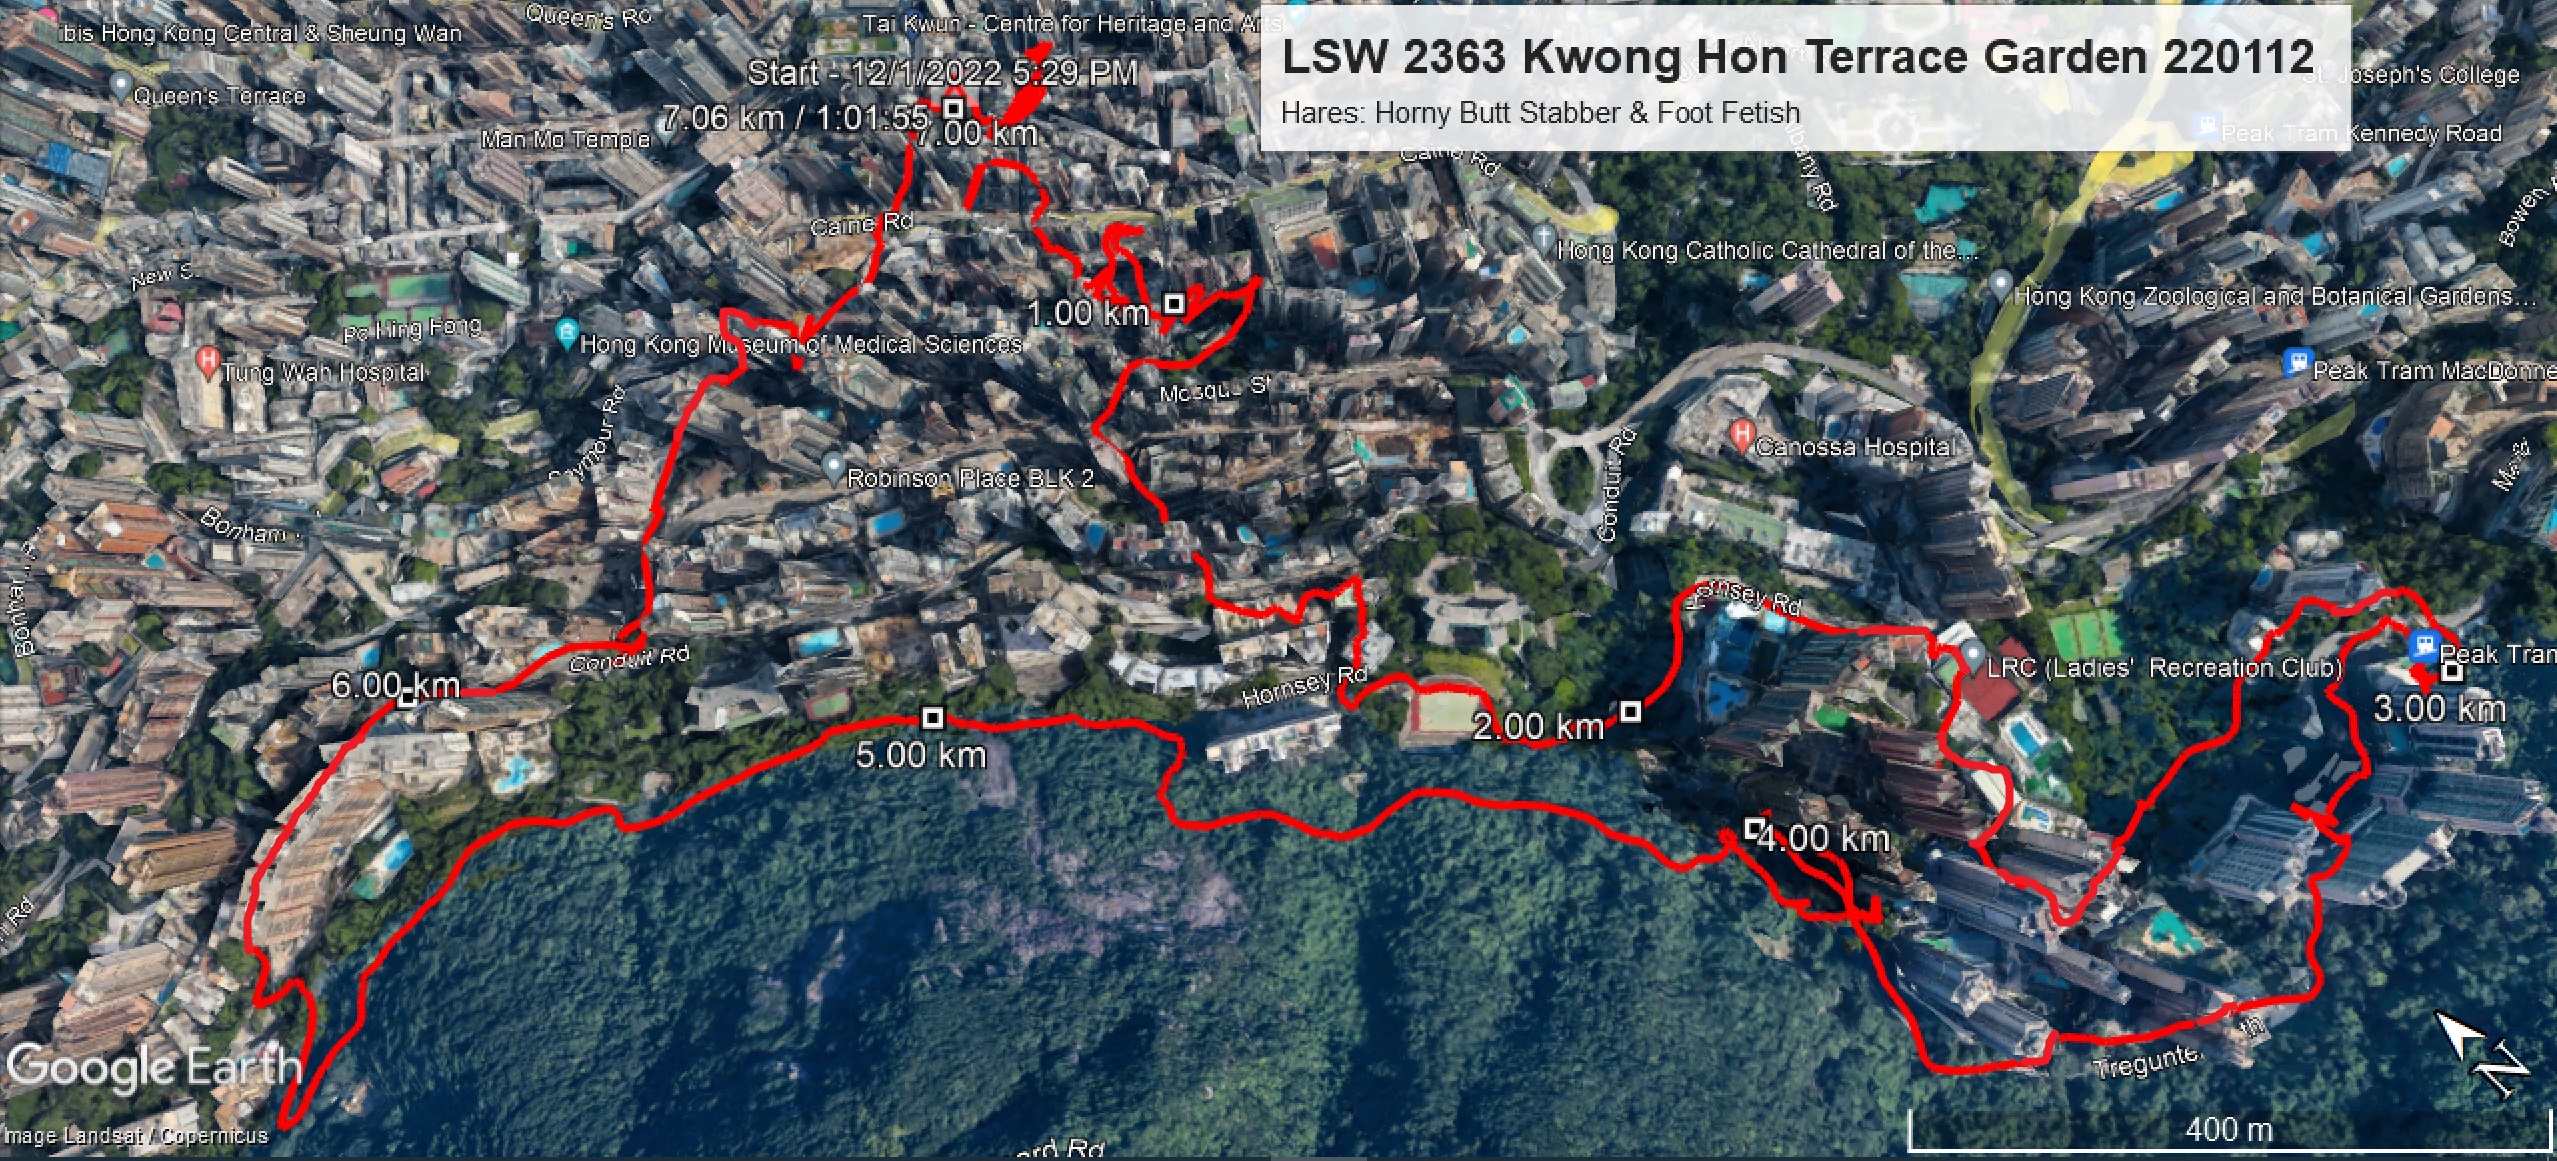 LSW 2363 Kwong Hon Terrace Garden 220112 7.06km